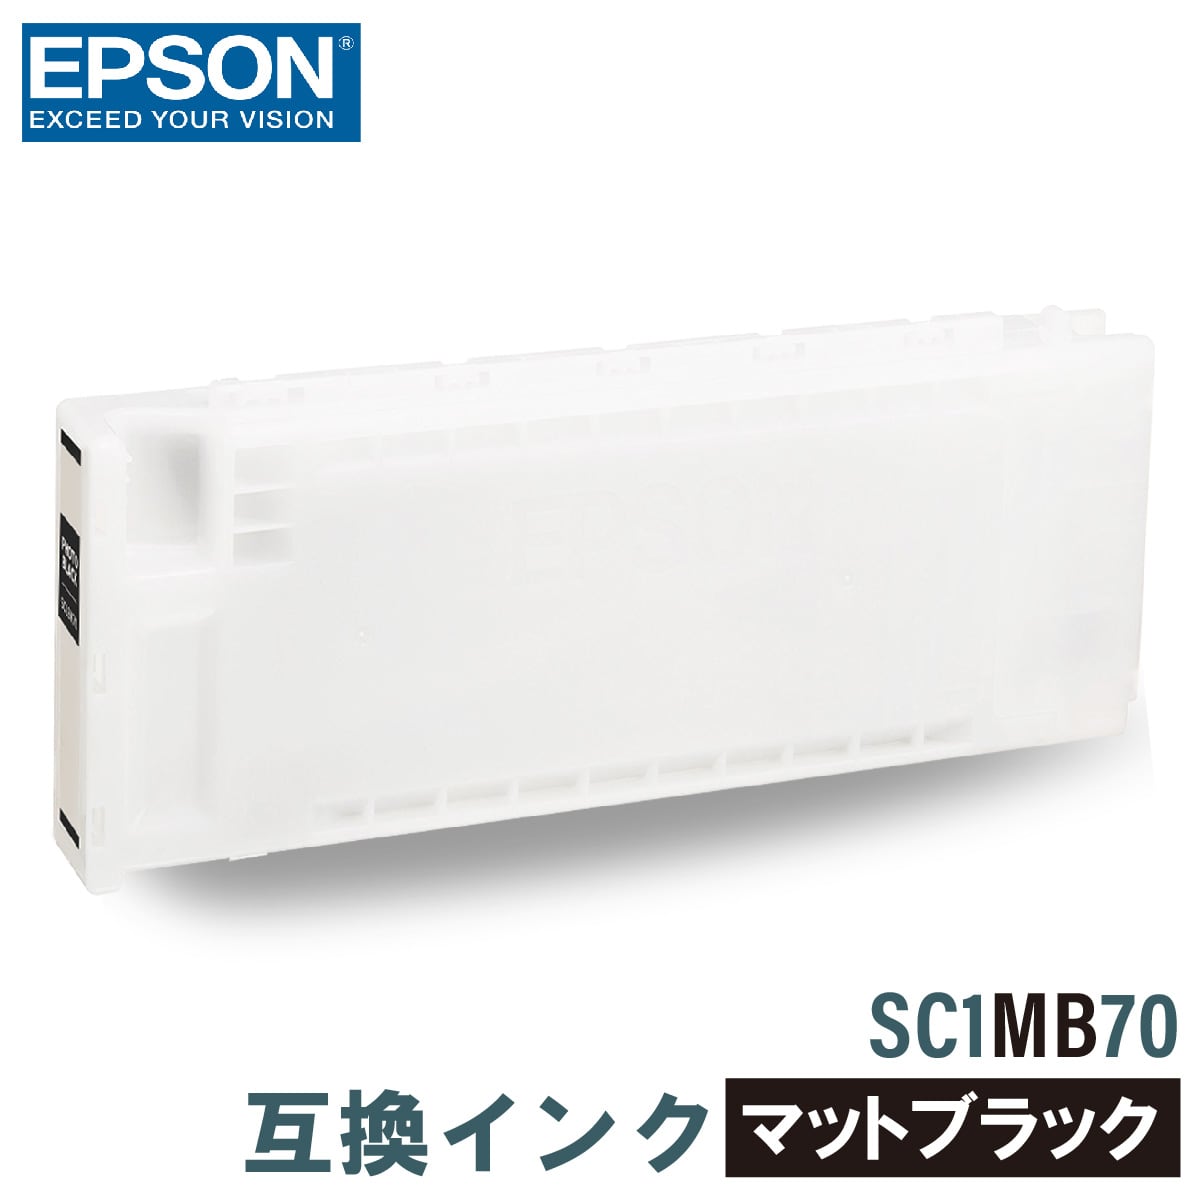 EPSON SC1MB70 オフィス用品一般